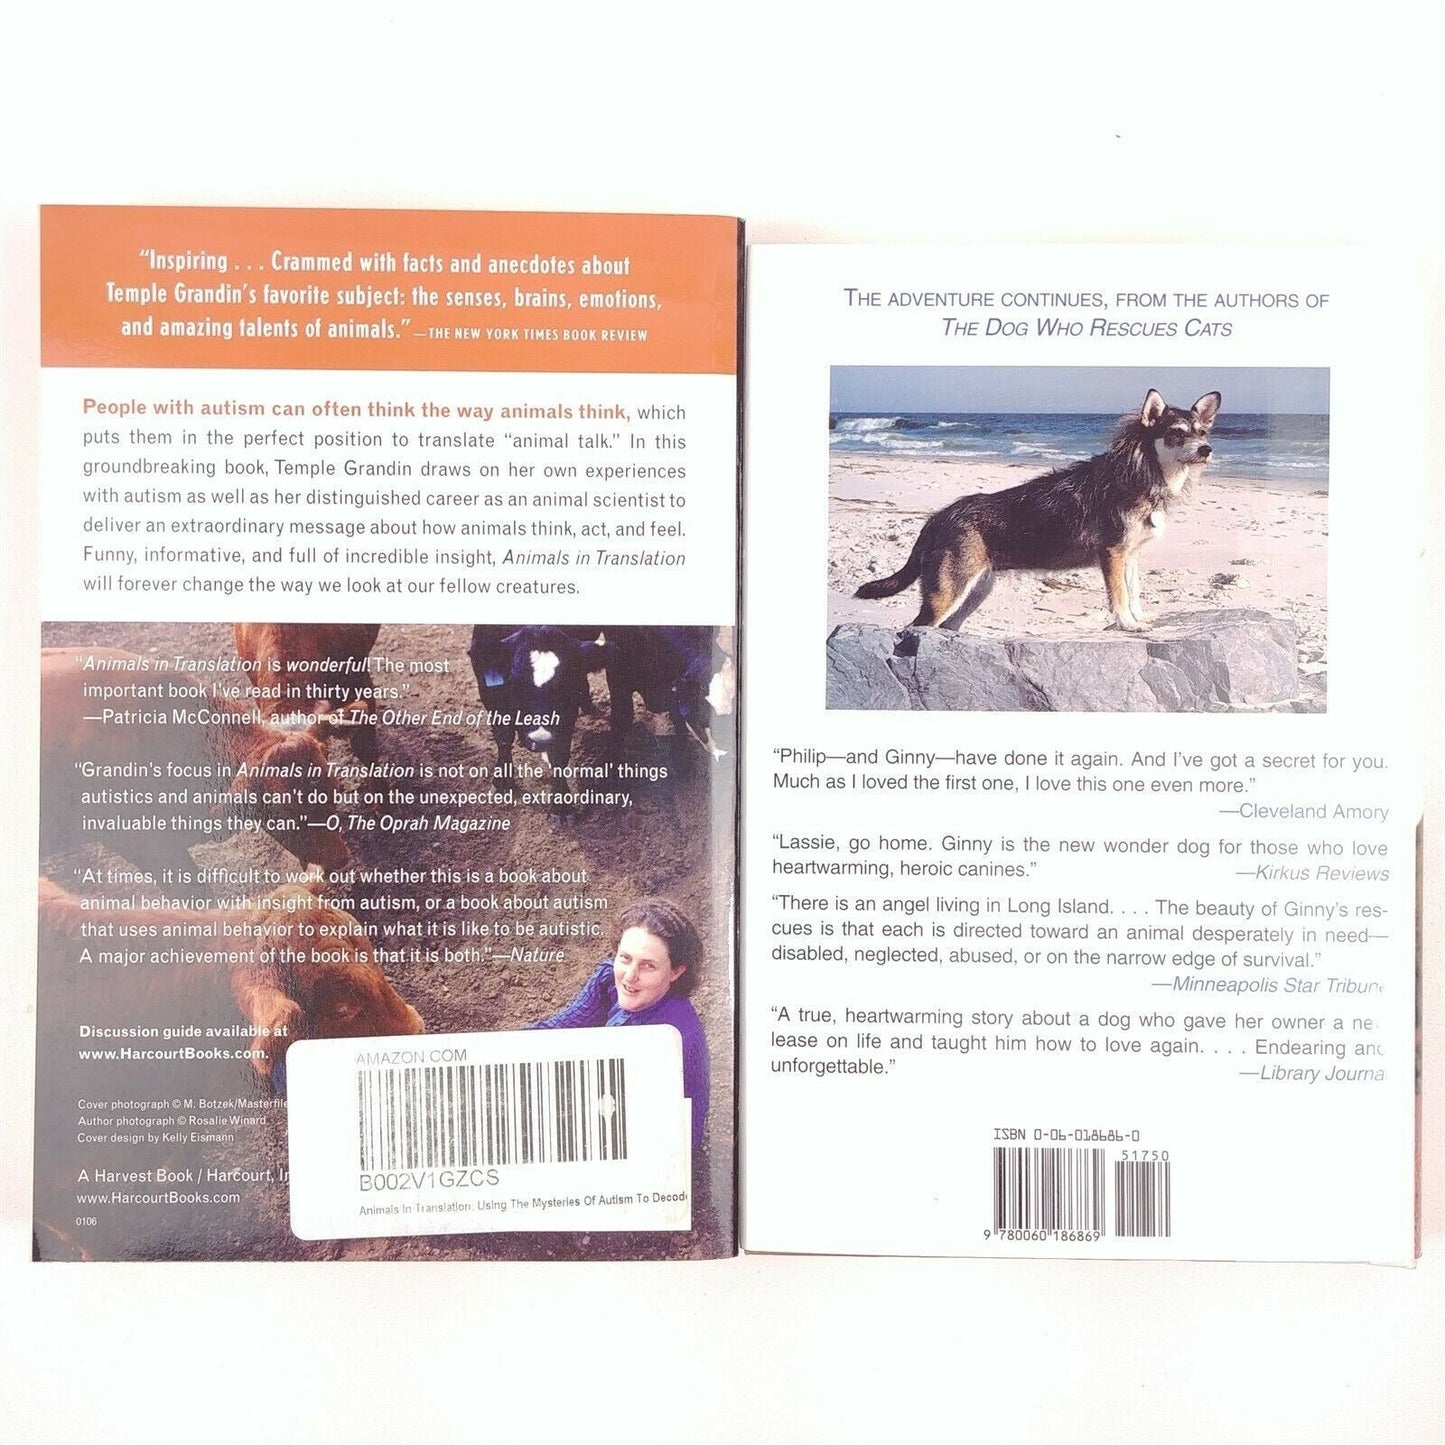 Animal Books on Behavior, Companionship, & Stories Various Covers